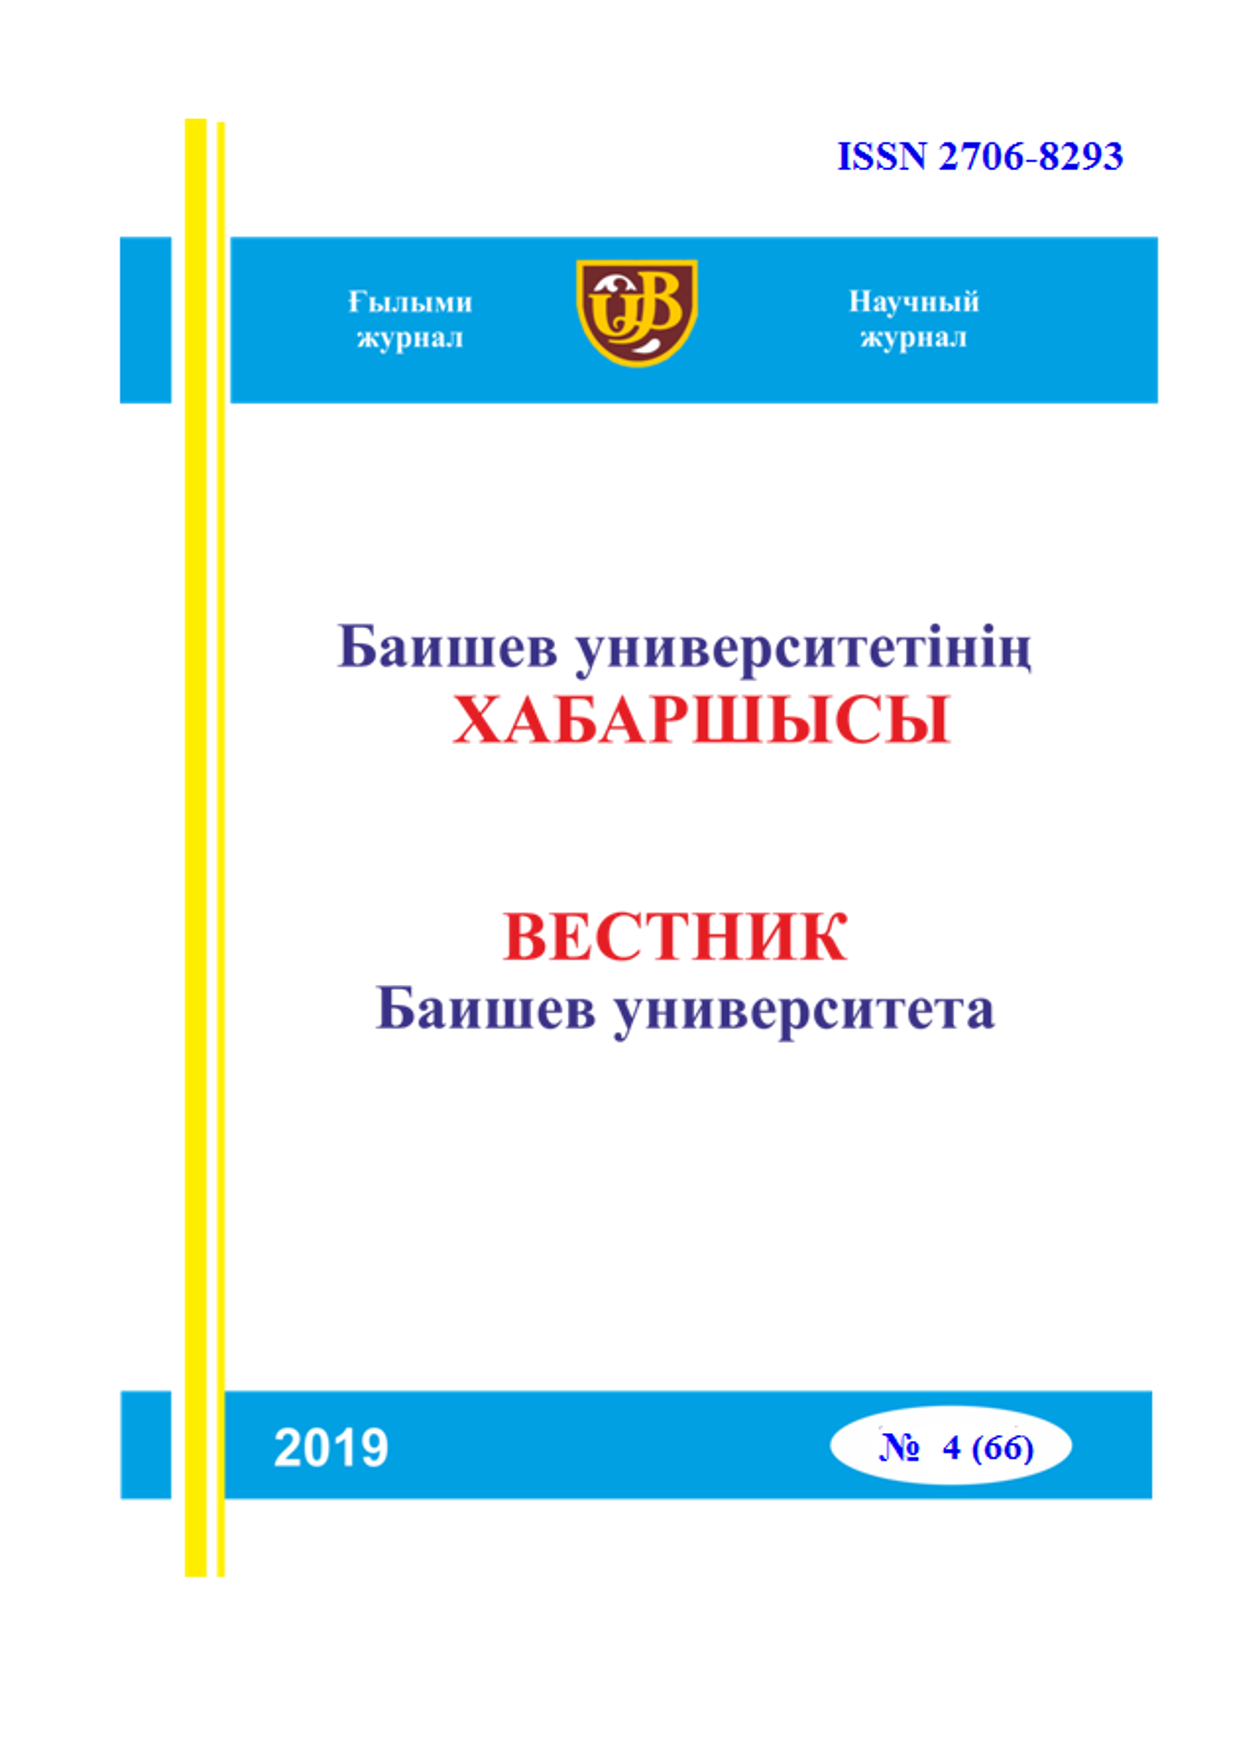 Вестник Баишев Университета №4(66) 2019г